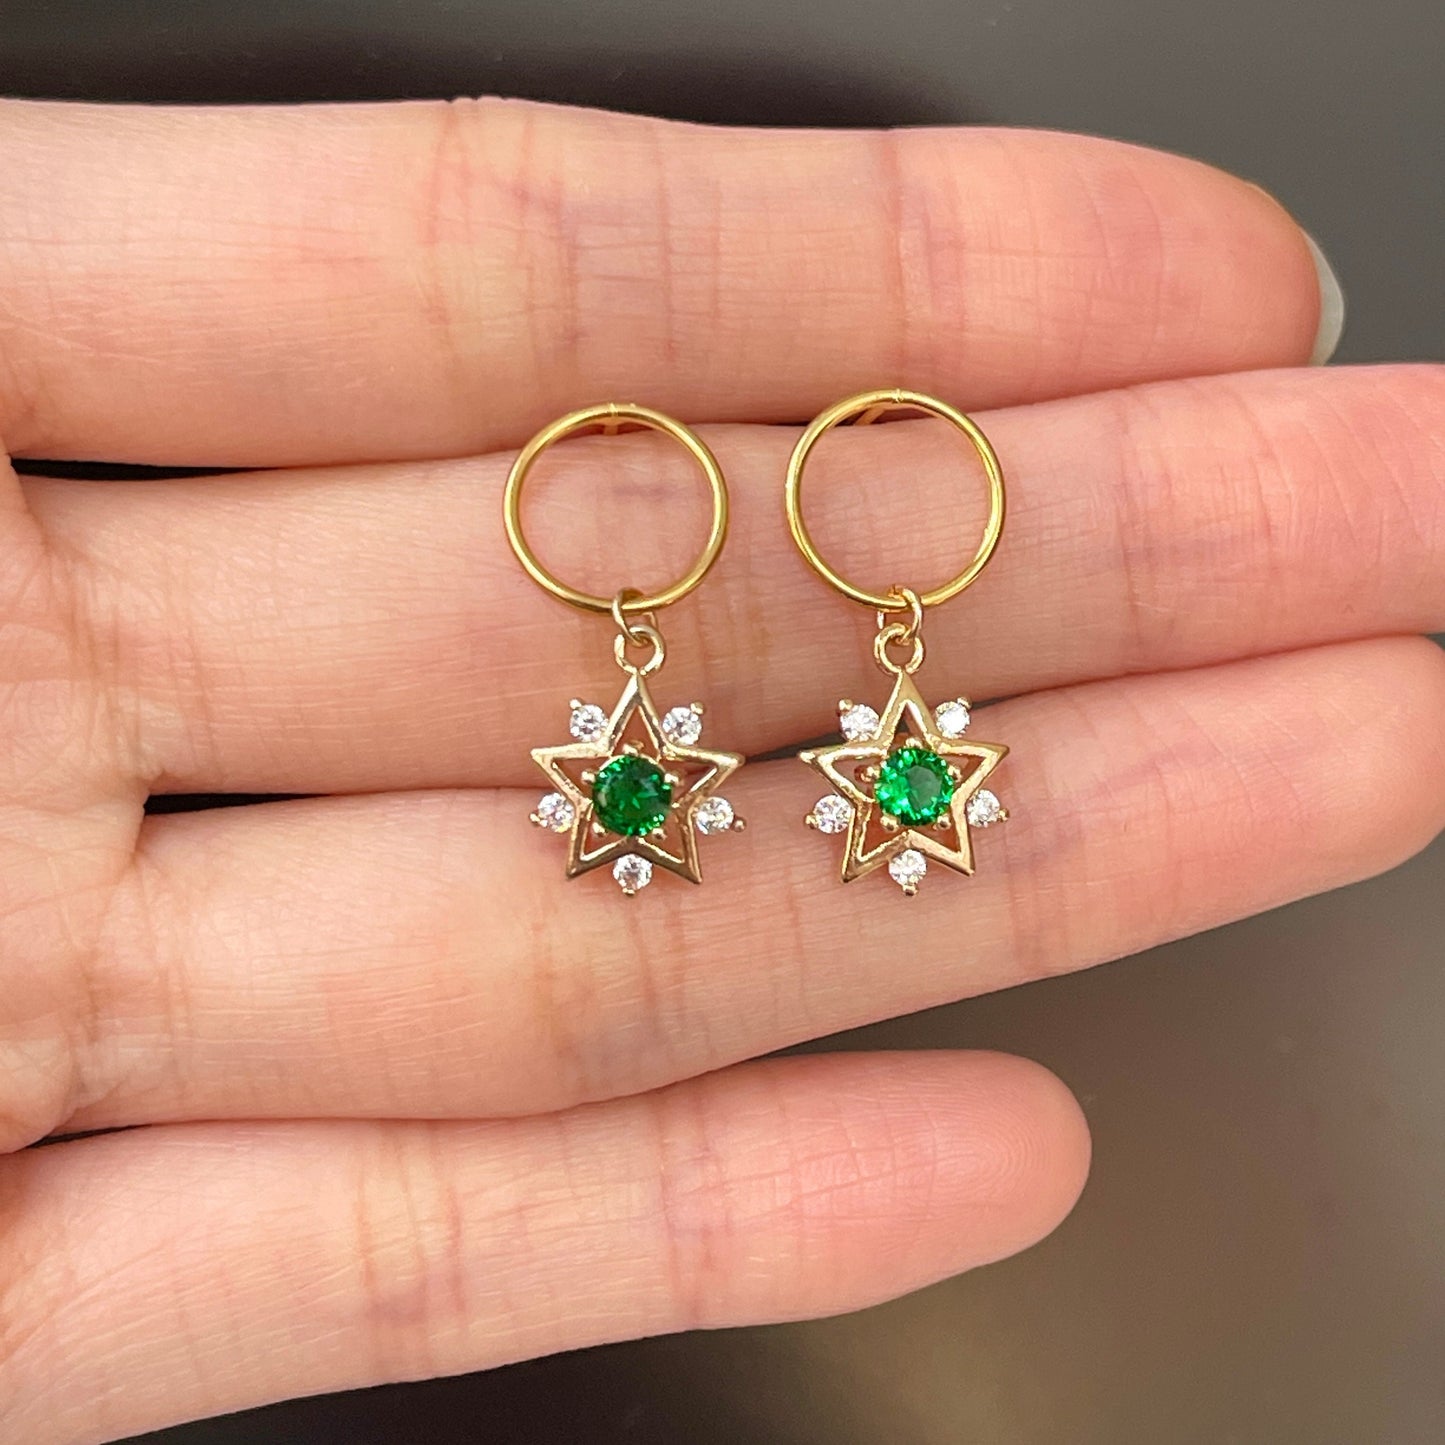 Emerald gold earrings, Emerald green earrings, Golden north star earrings, Gold starburst earrings, Handmade delicate gift, Minimalist hoop